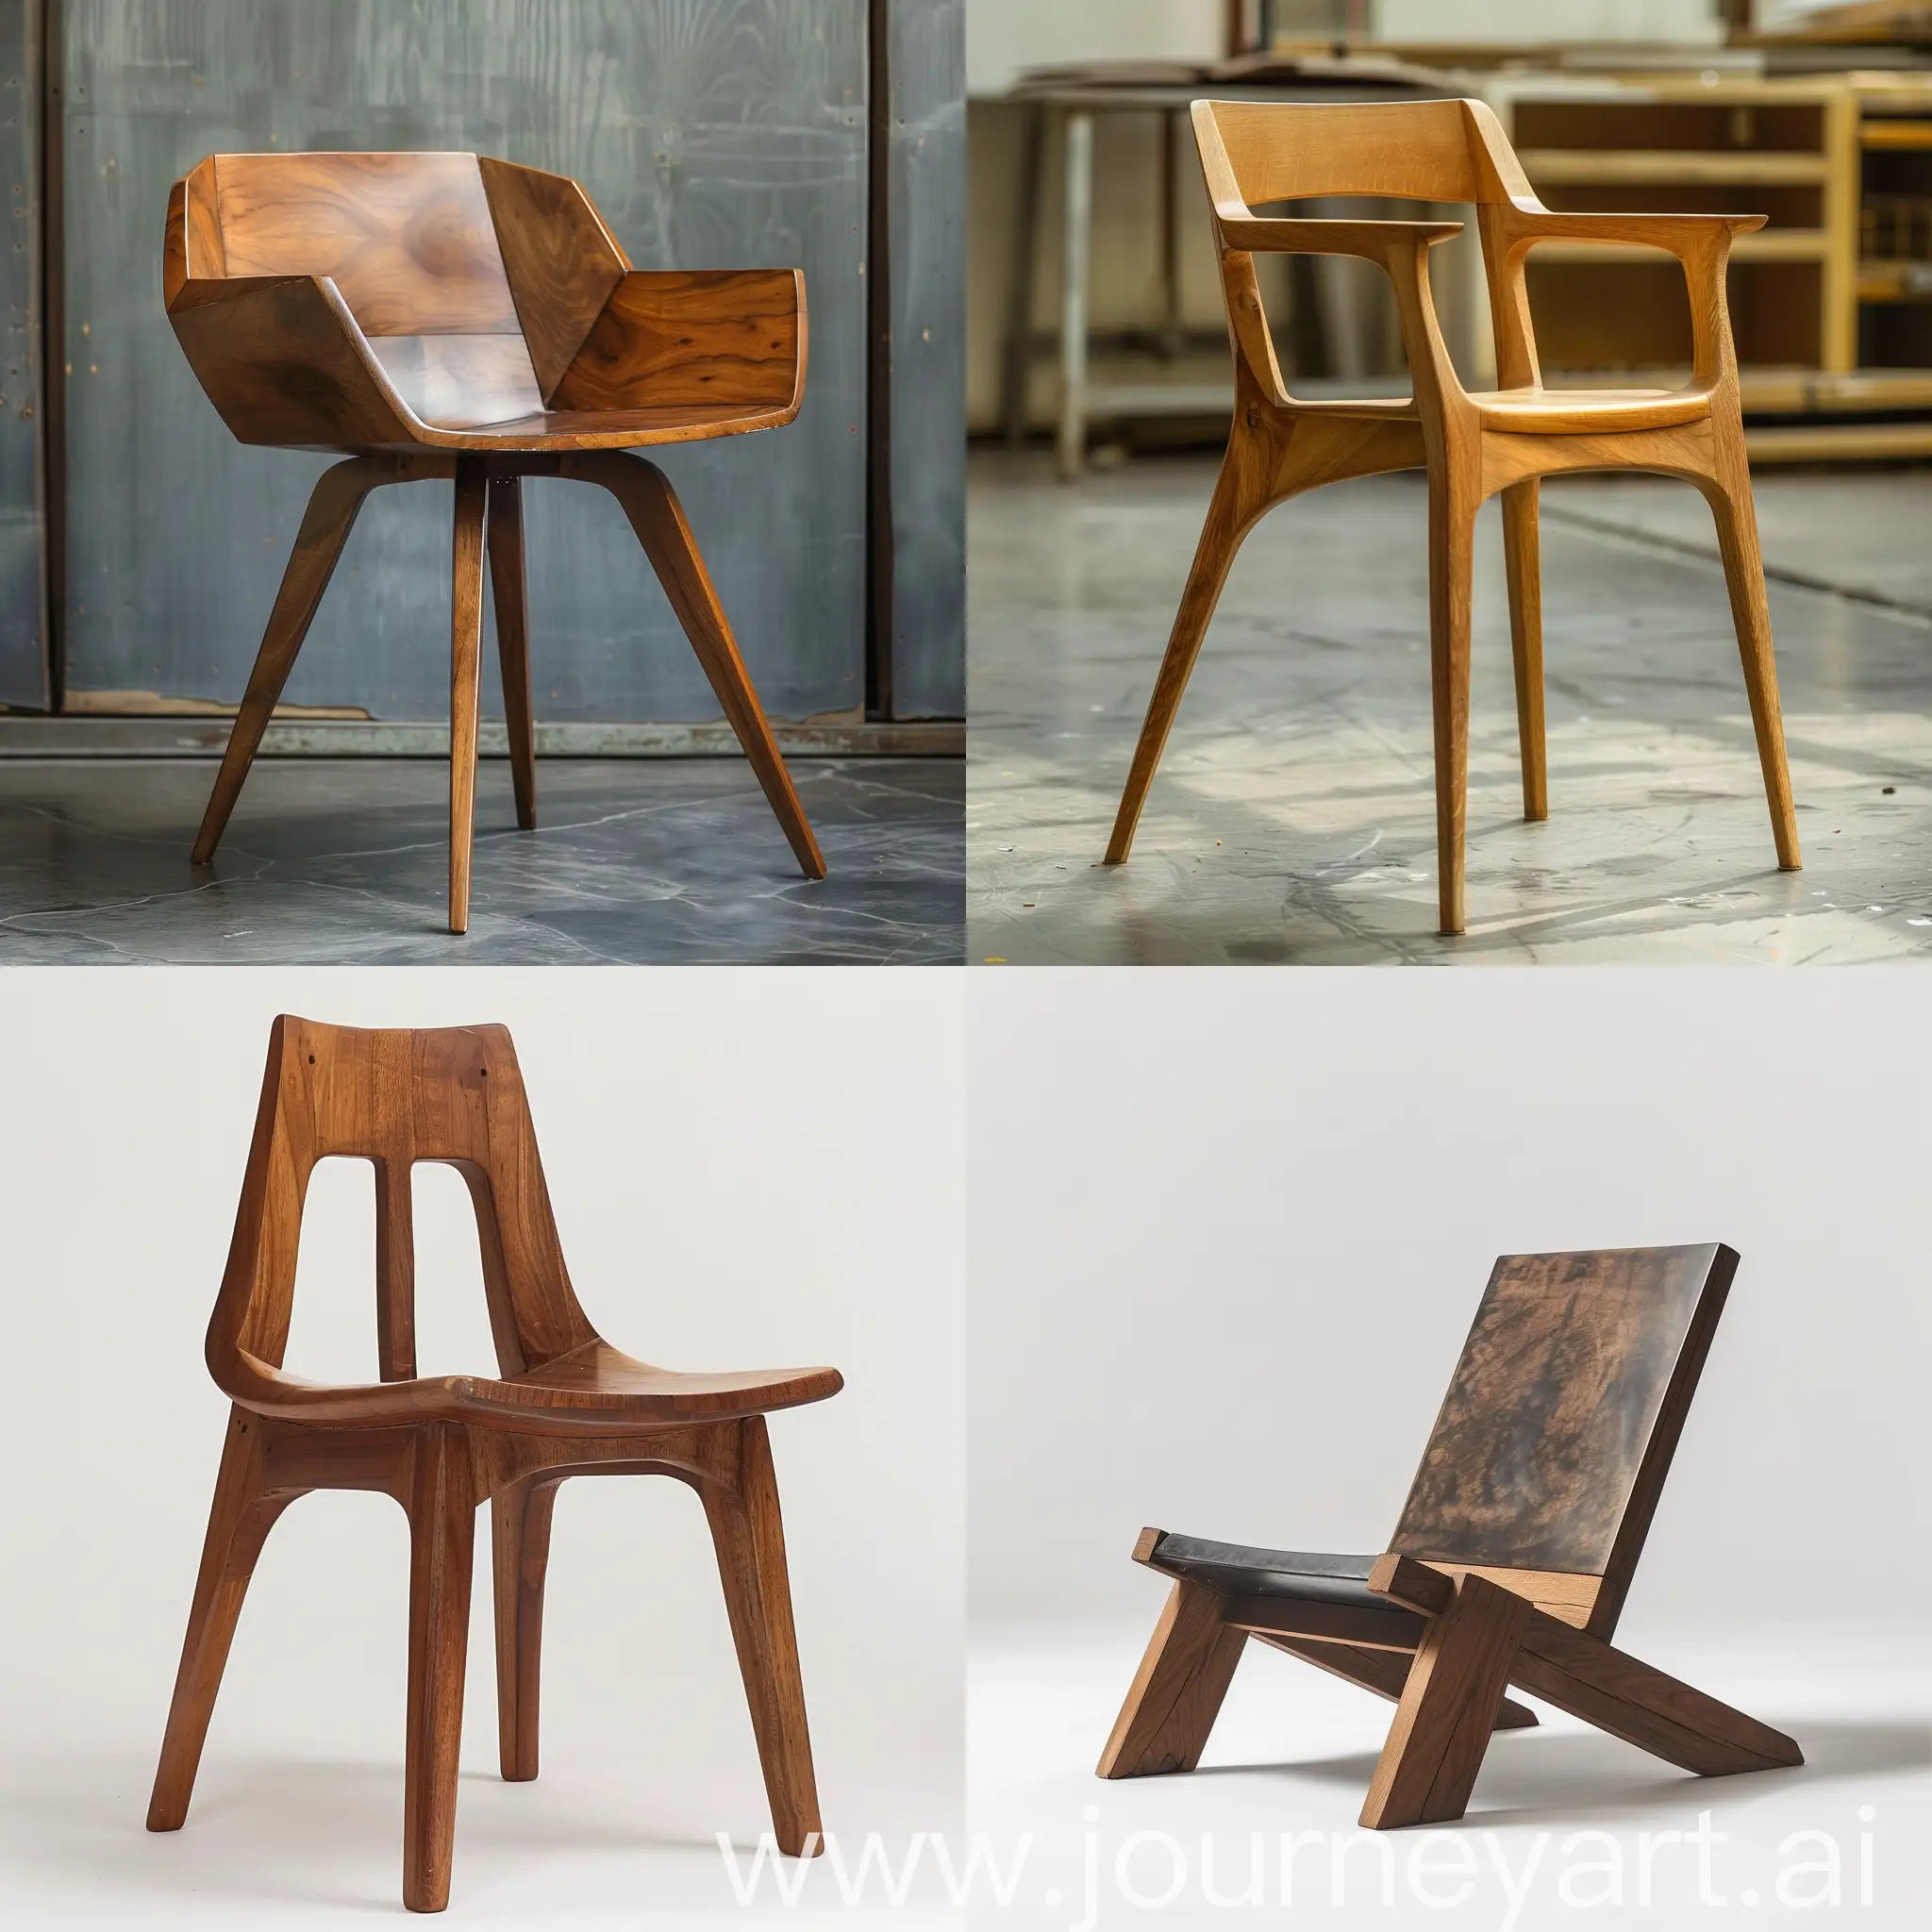 Iranian-Modern-Minimal-Wooden-Chair-Design-Version-6